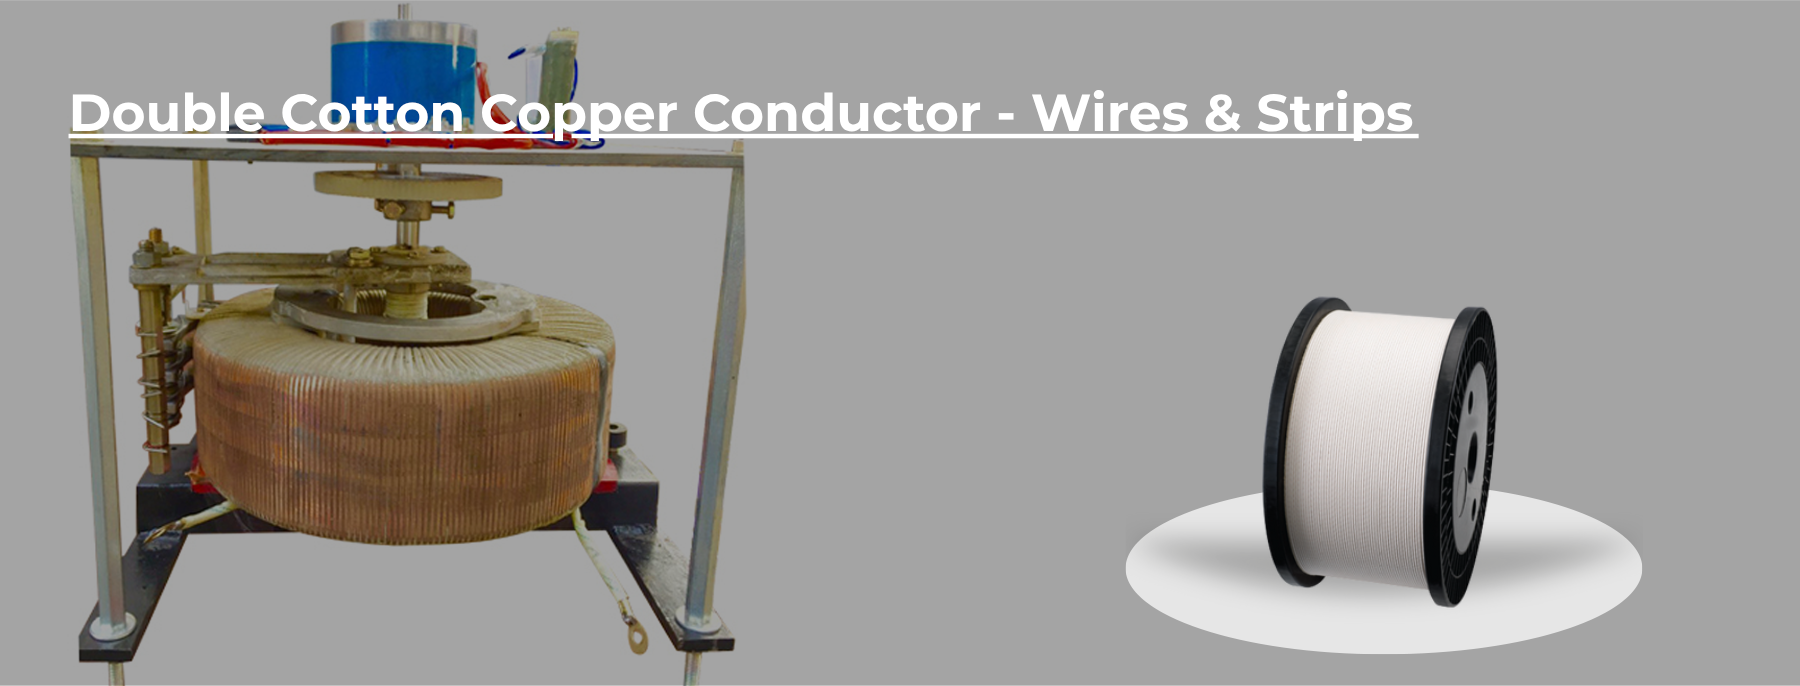 Double Cotton Copper Conductor